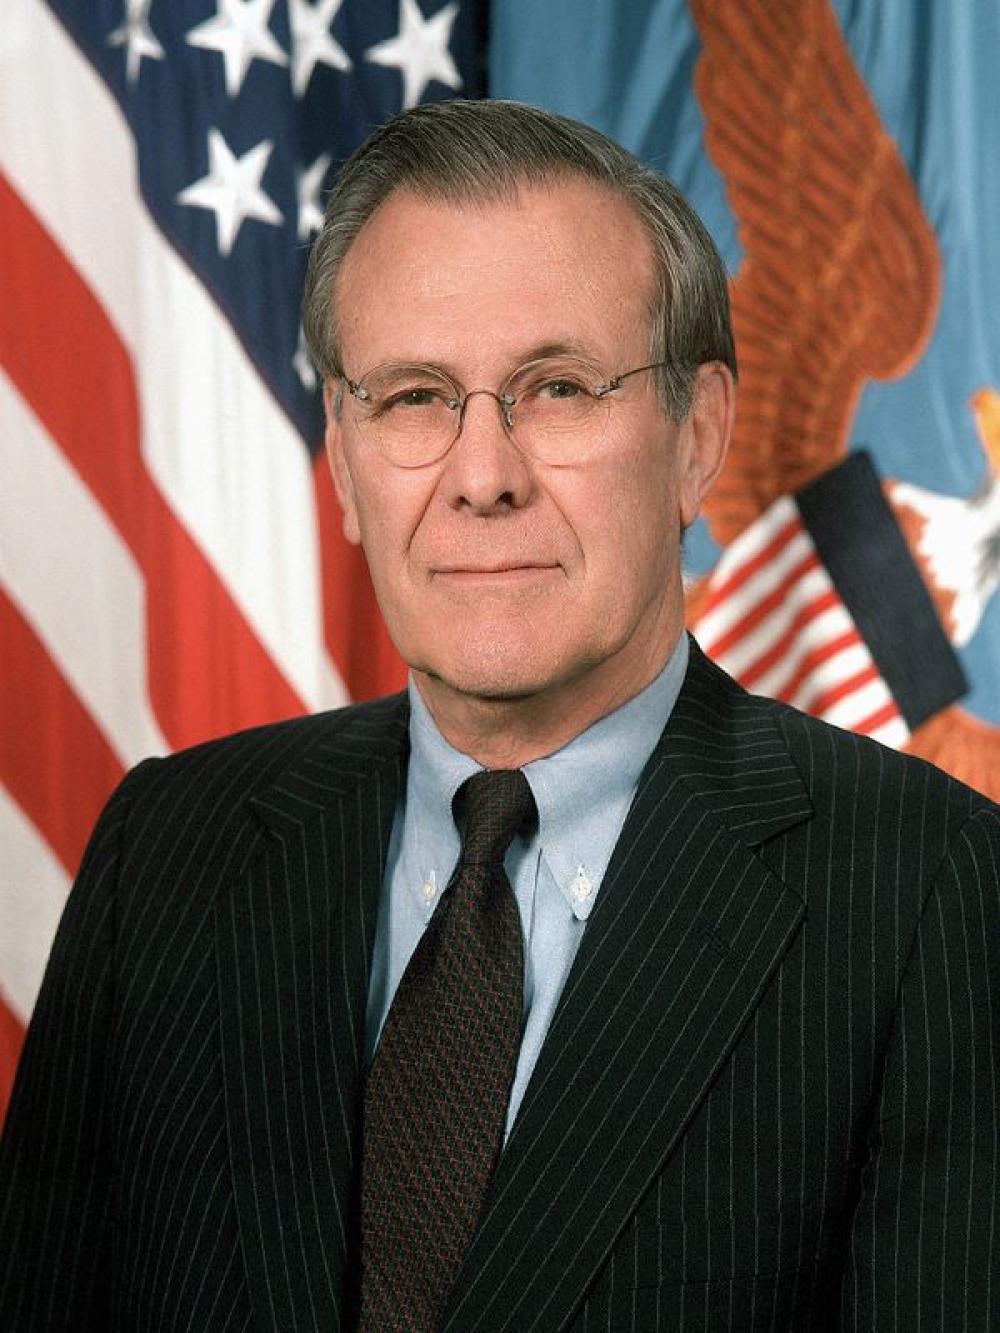 Donald Rumsfeld: Two-time US Defense Secretary who led America